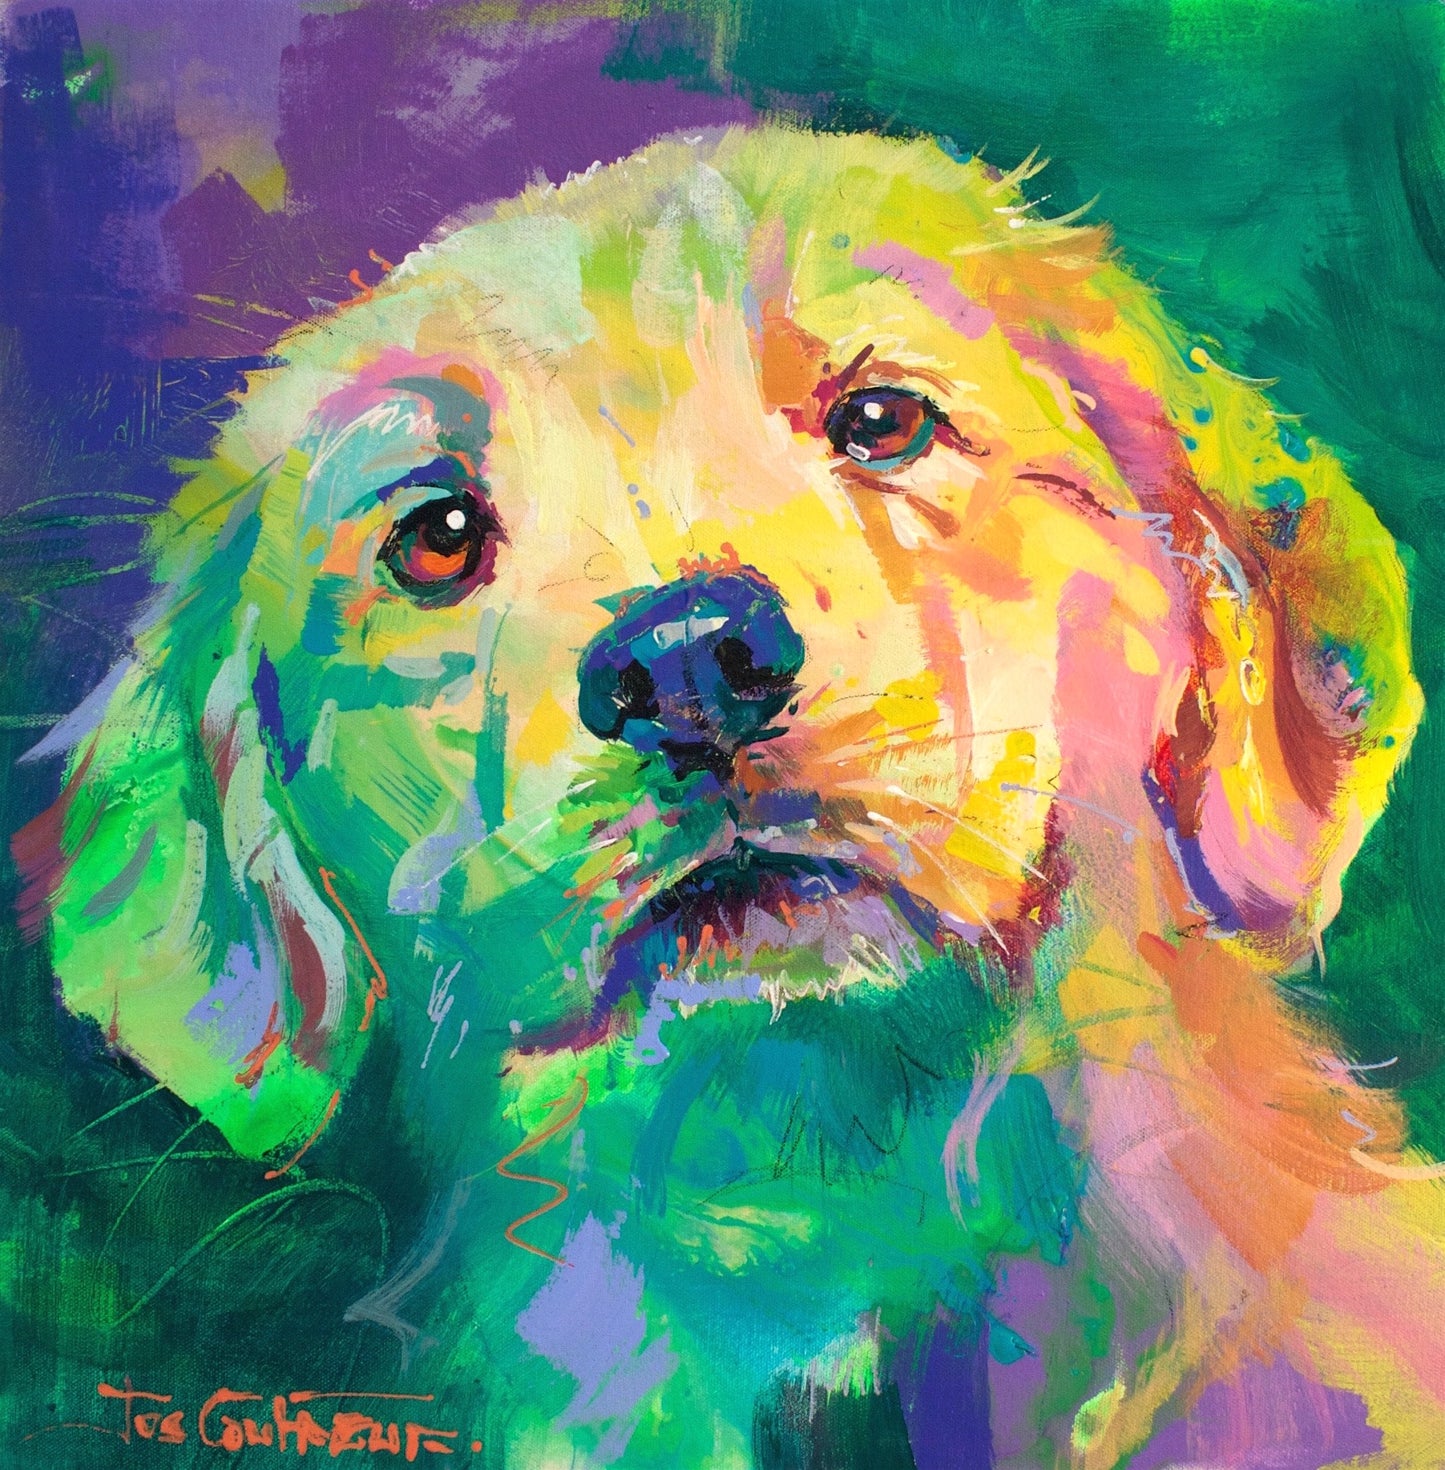 Golden Retriever Puppy Dog